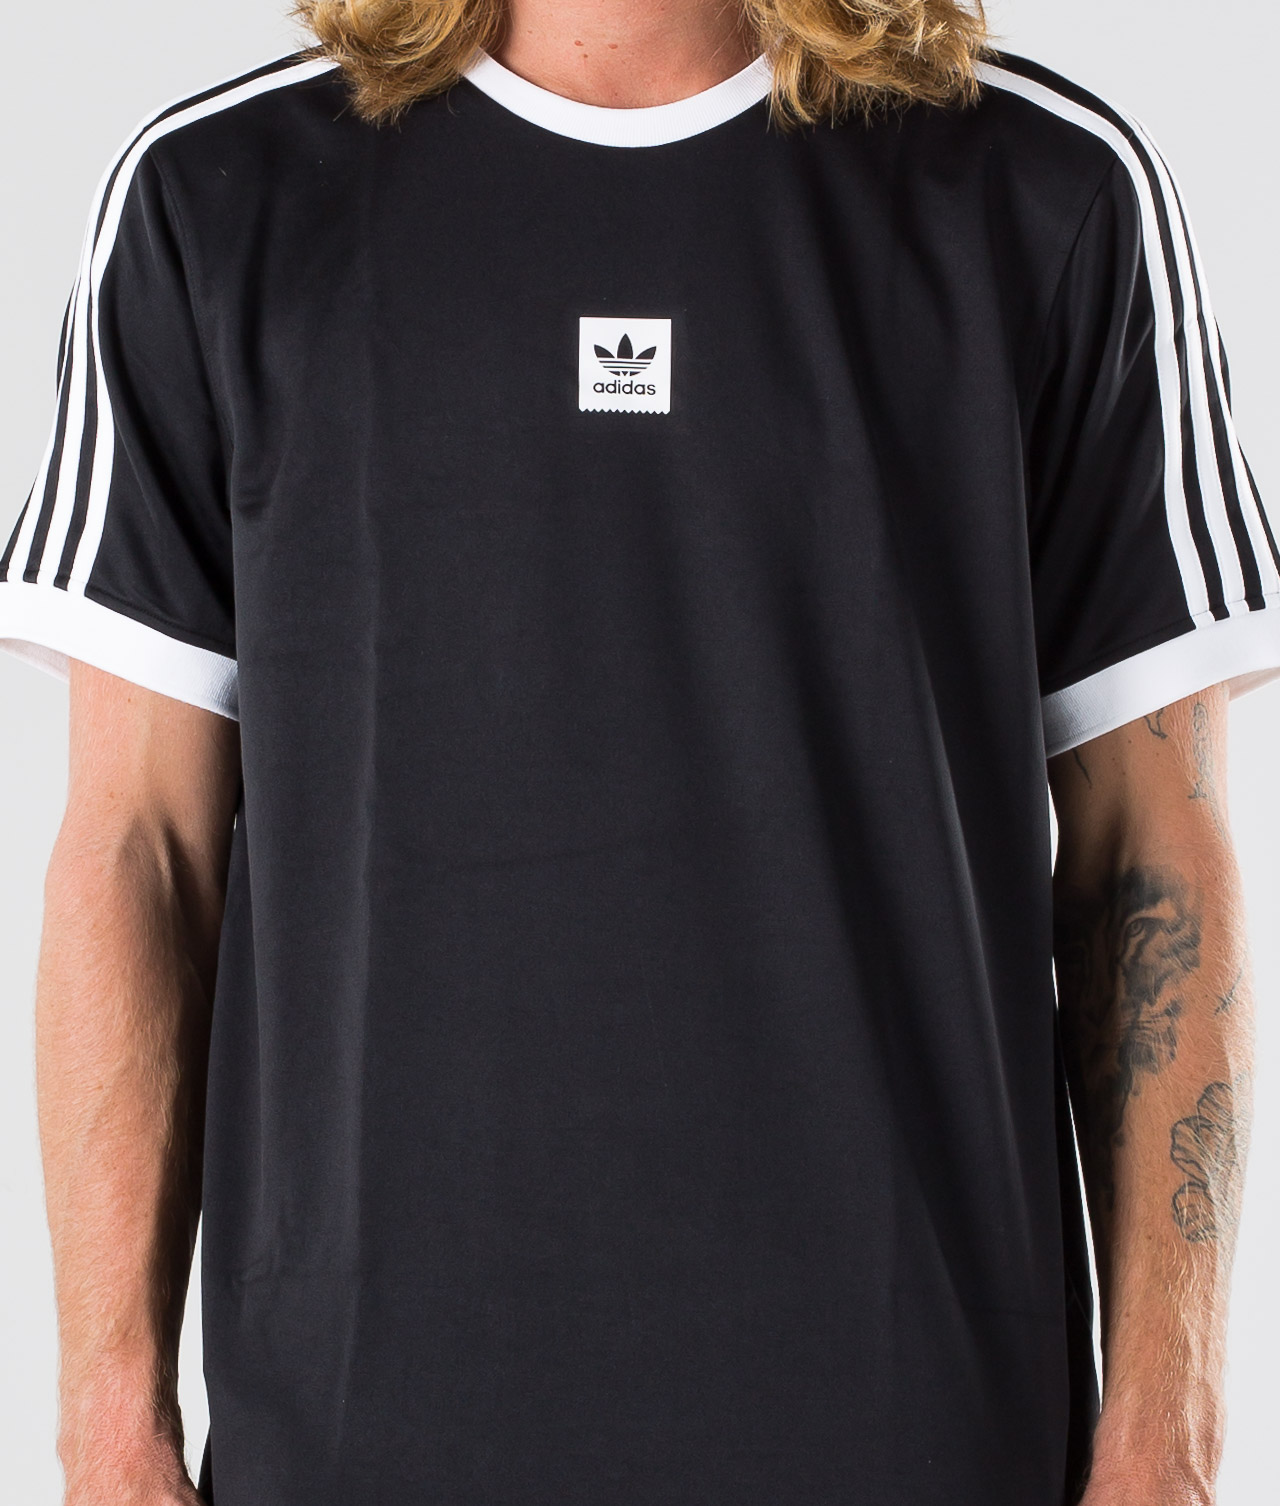 Club Jersey T-shirt Black/White 